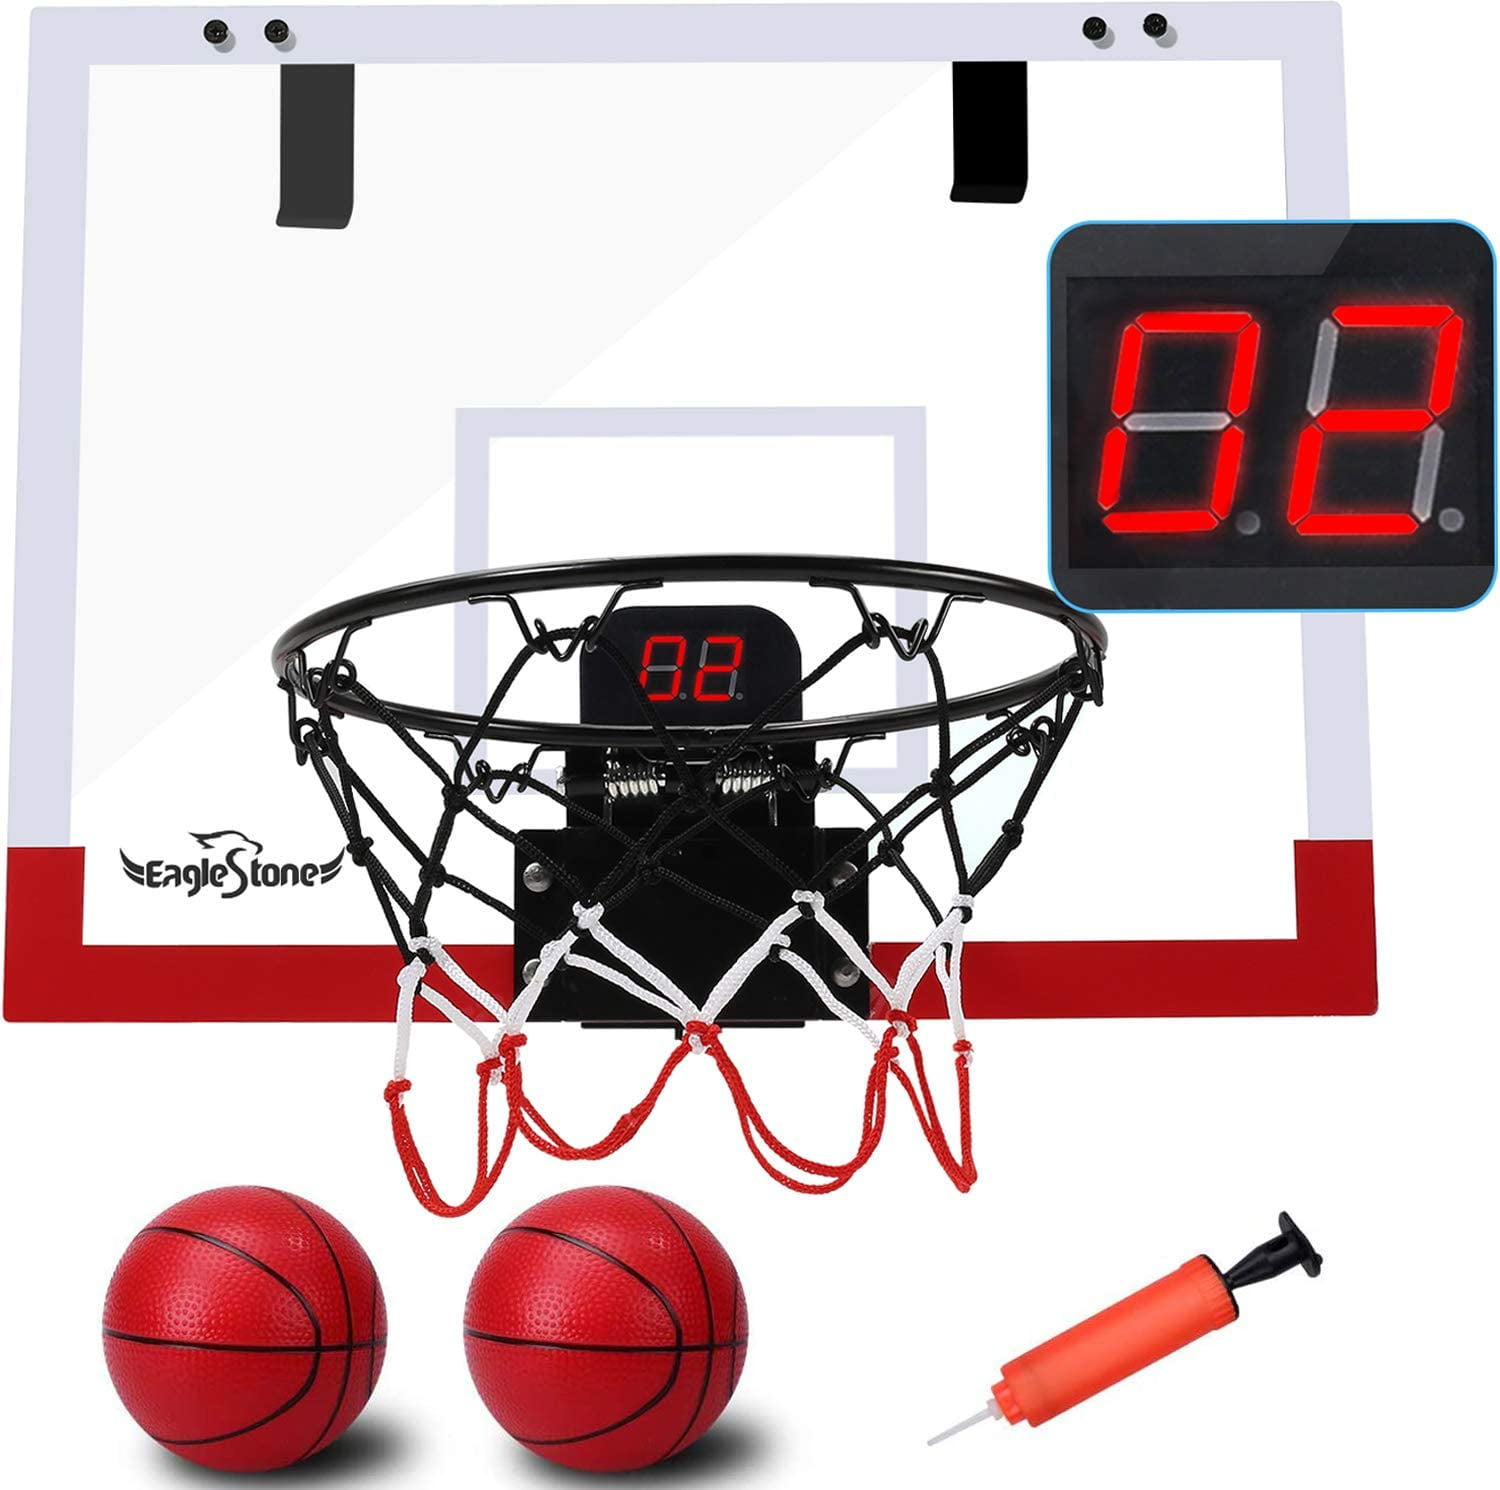 Kids Sports Mini Basketball Backboard Hoop Net Set Indoor Outdoor Toy W/ Balls 